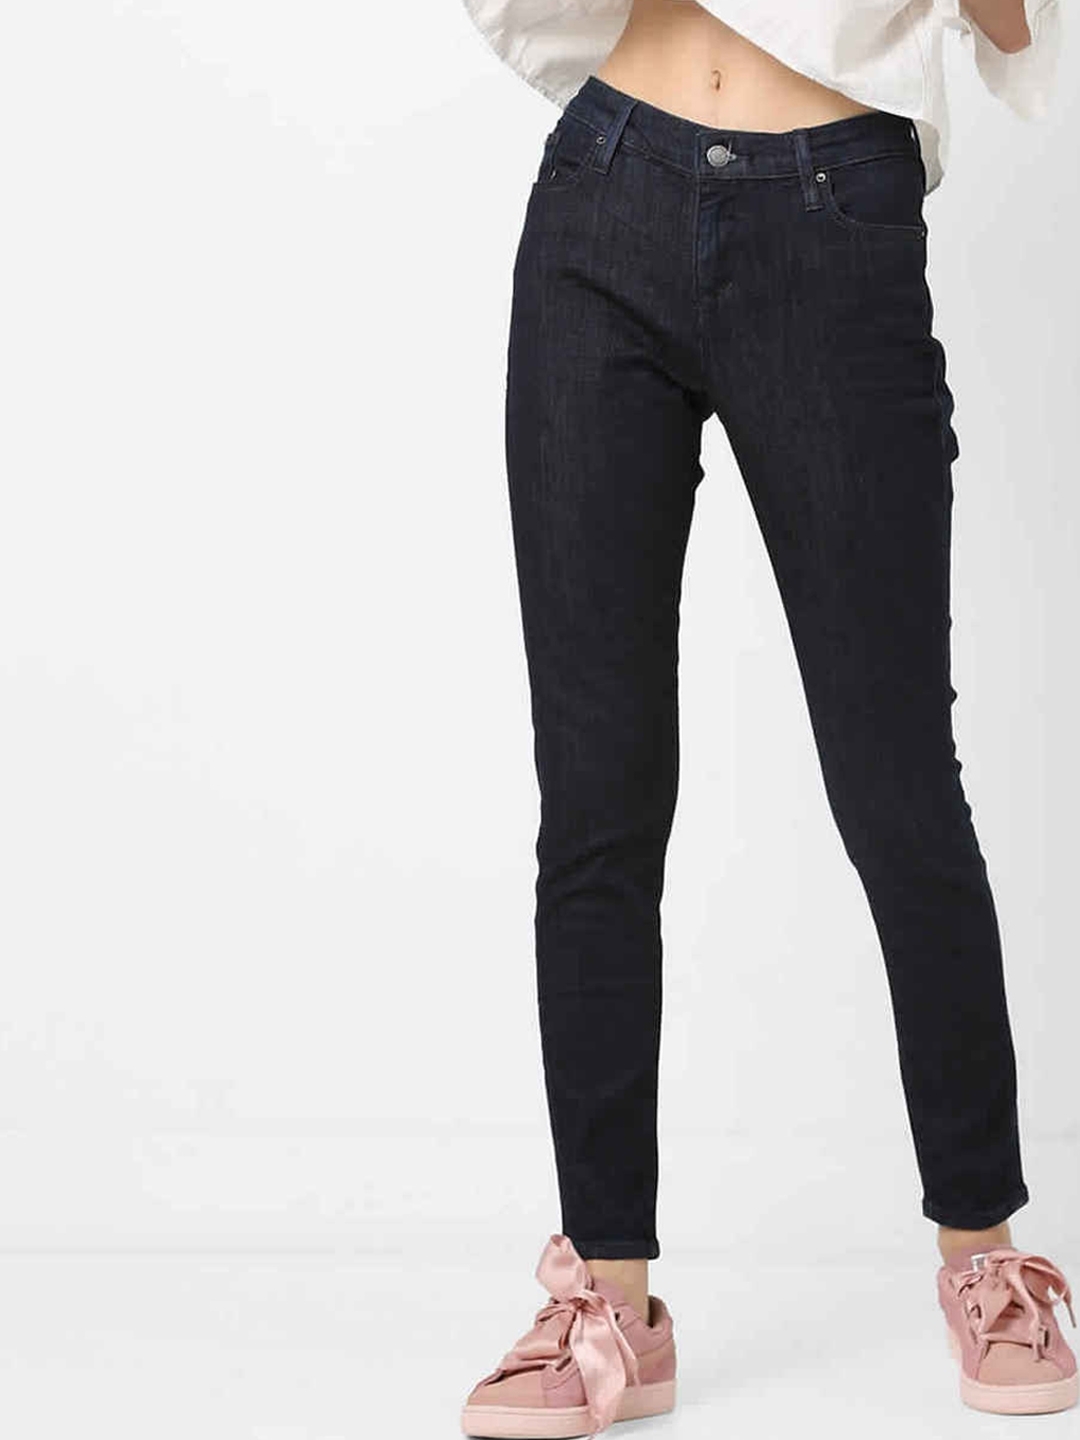 Women's skinny fit Star jeans